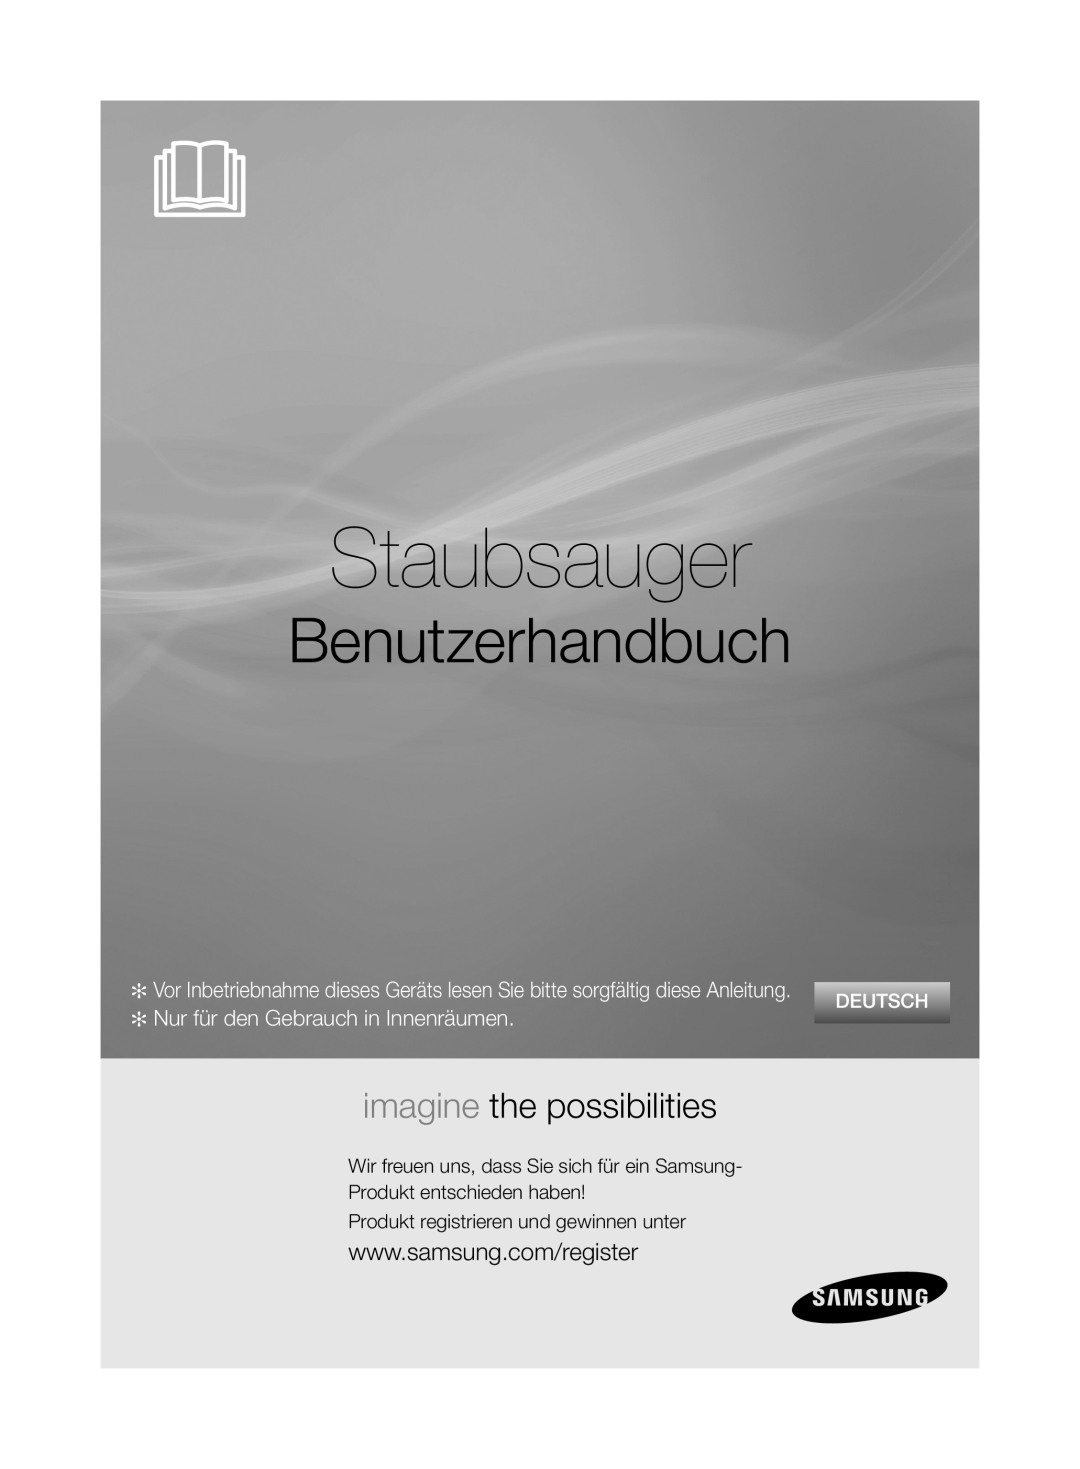 Samsung VCC7480V3R/XEG, VCC7480V3R/XEH manual Staubsauger, Benutzerhandbuch, imagine the possibilities, Deutsch 